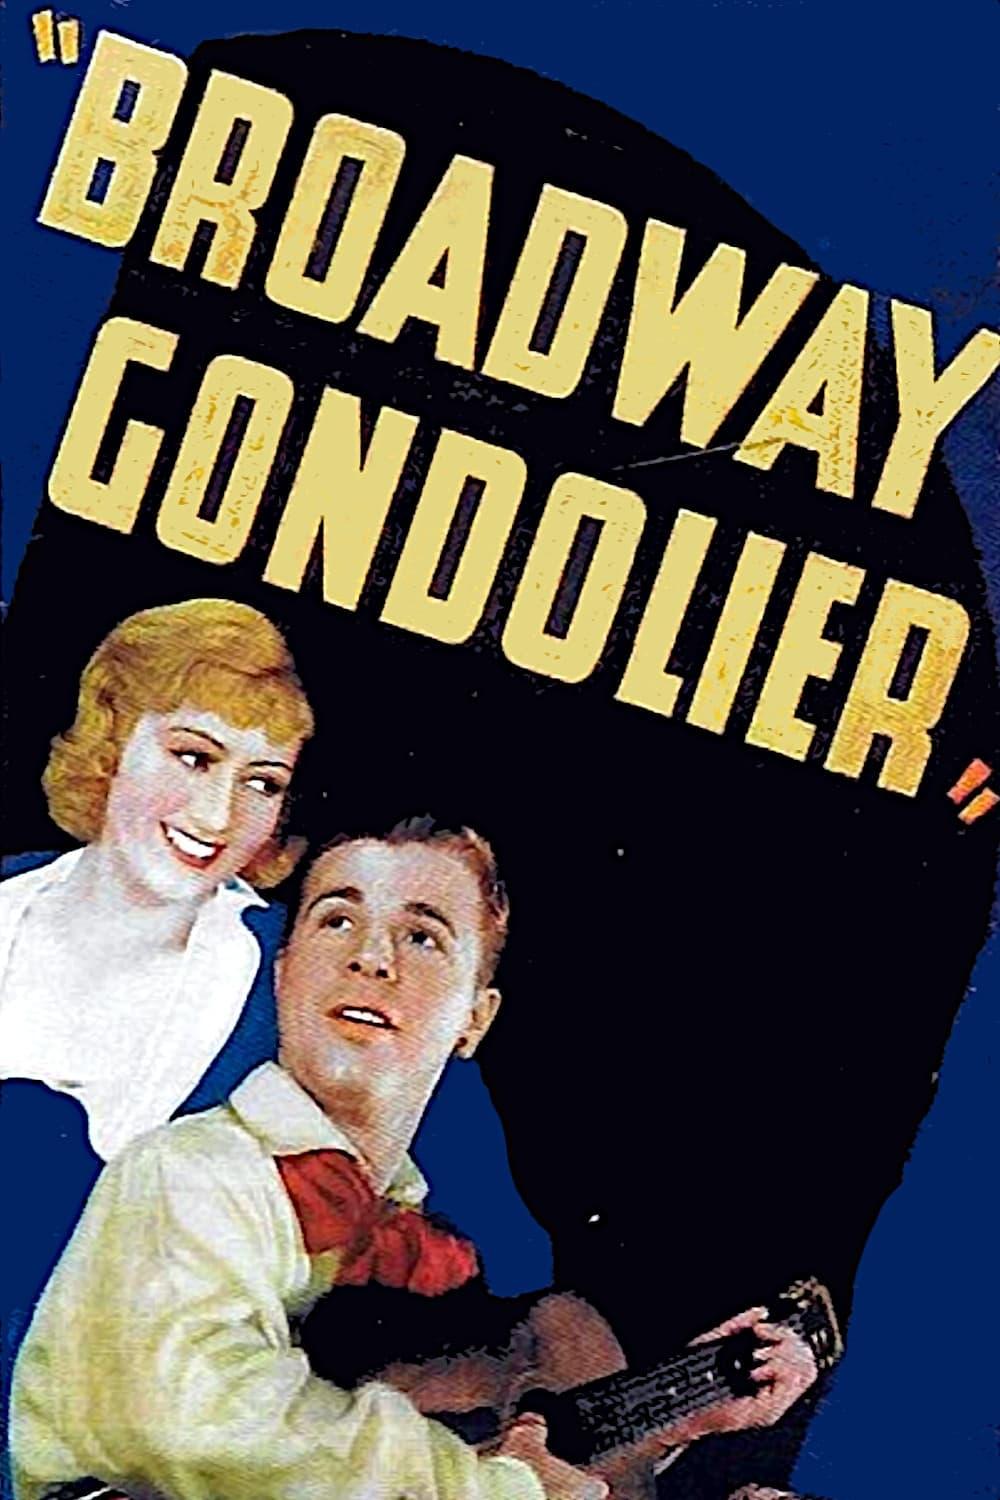 Broadway Gondolier poster